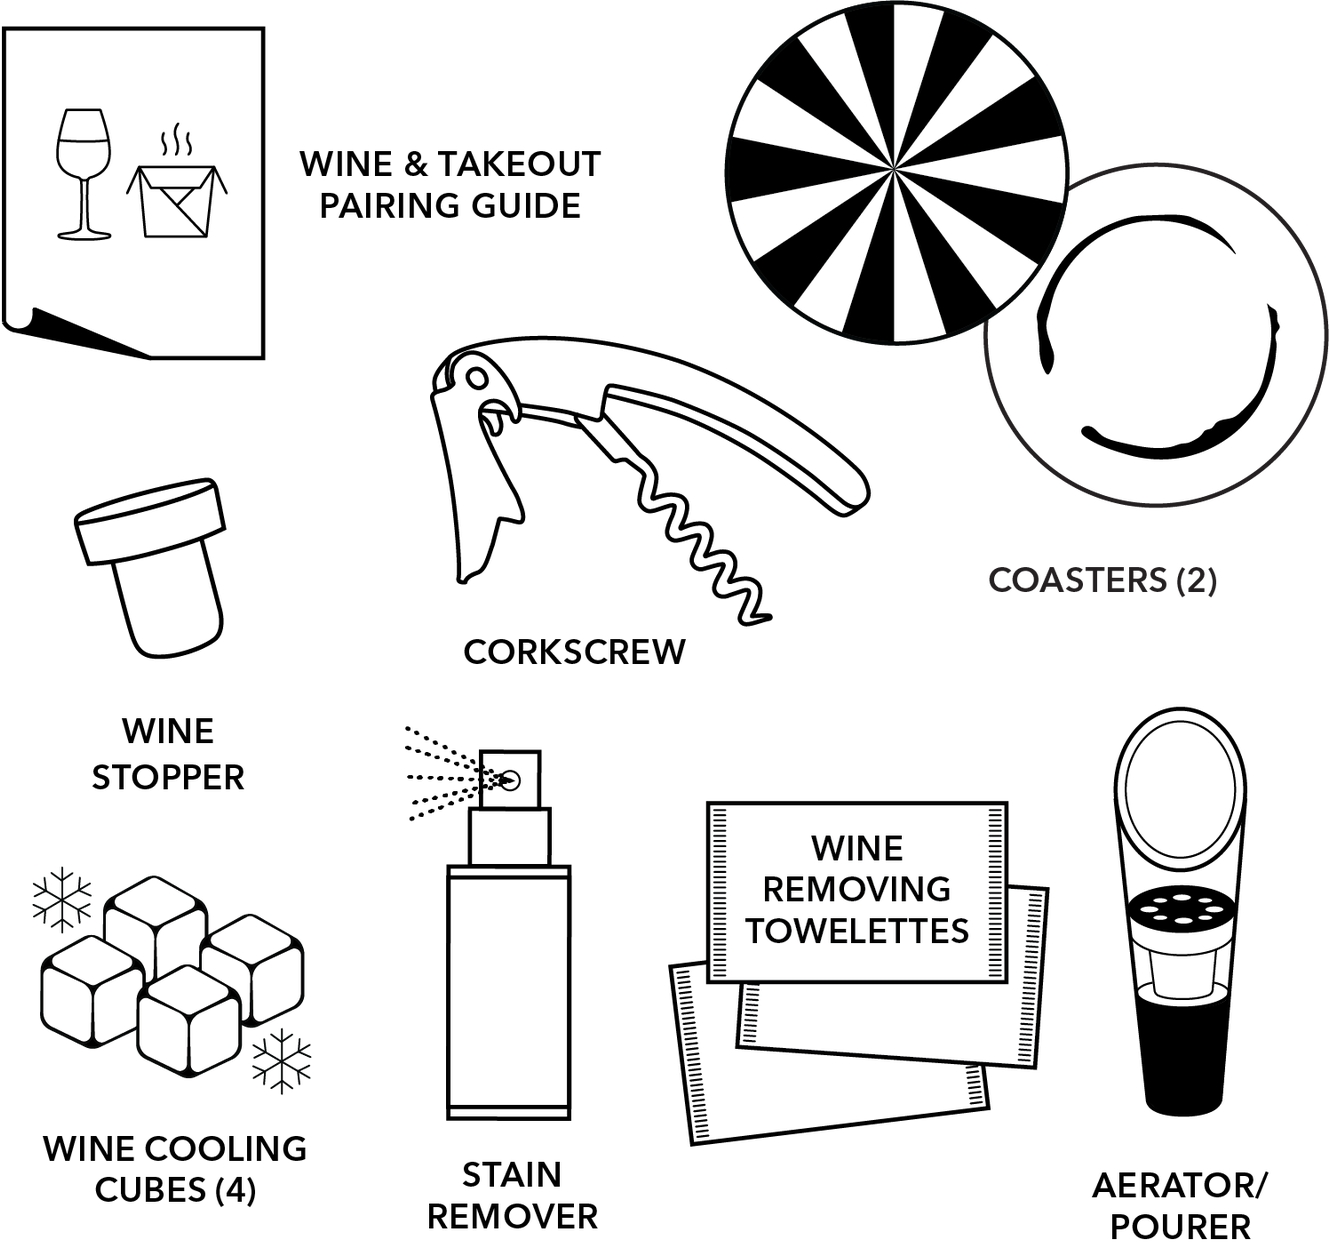 Pinch Provisions - Wine Night Kit